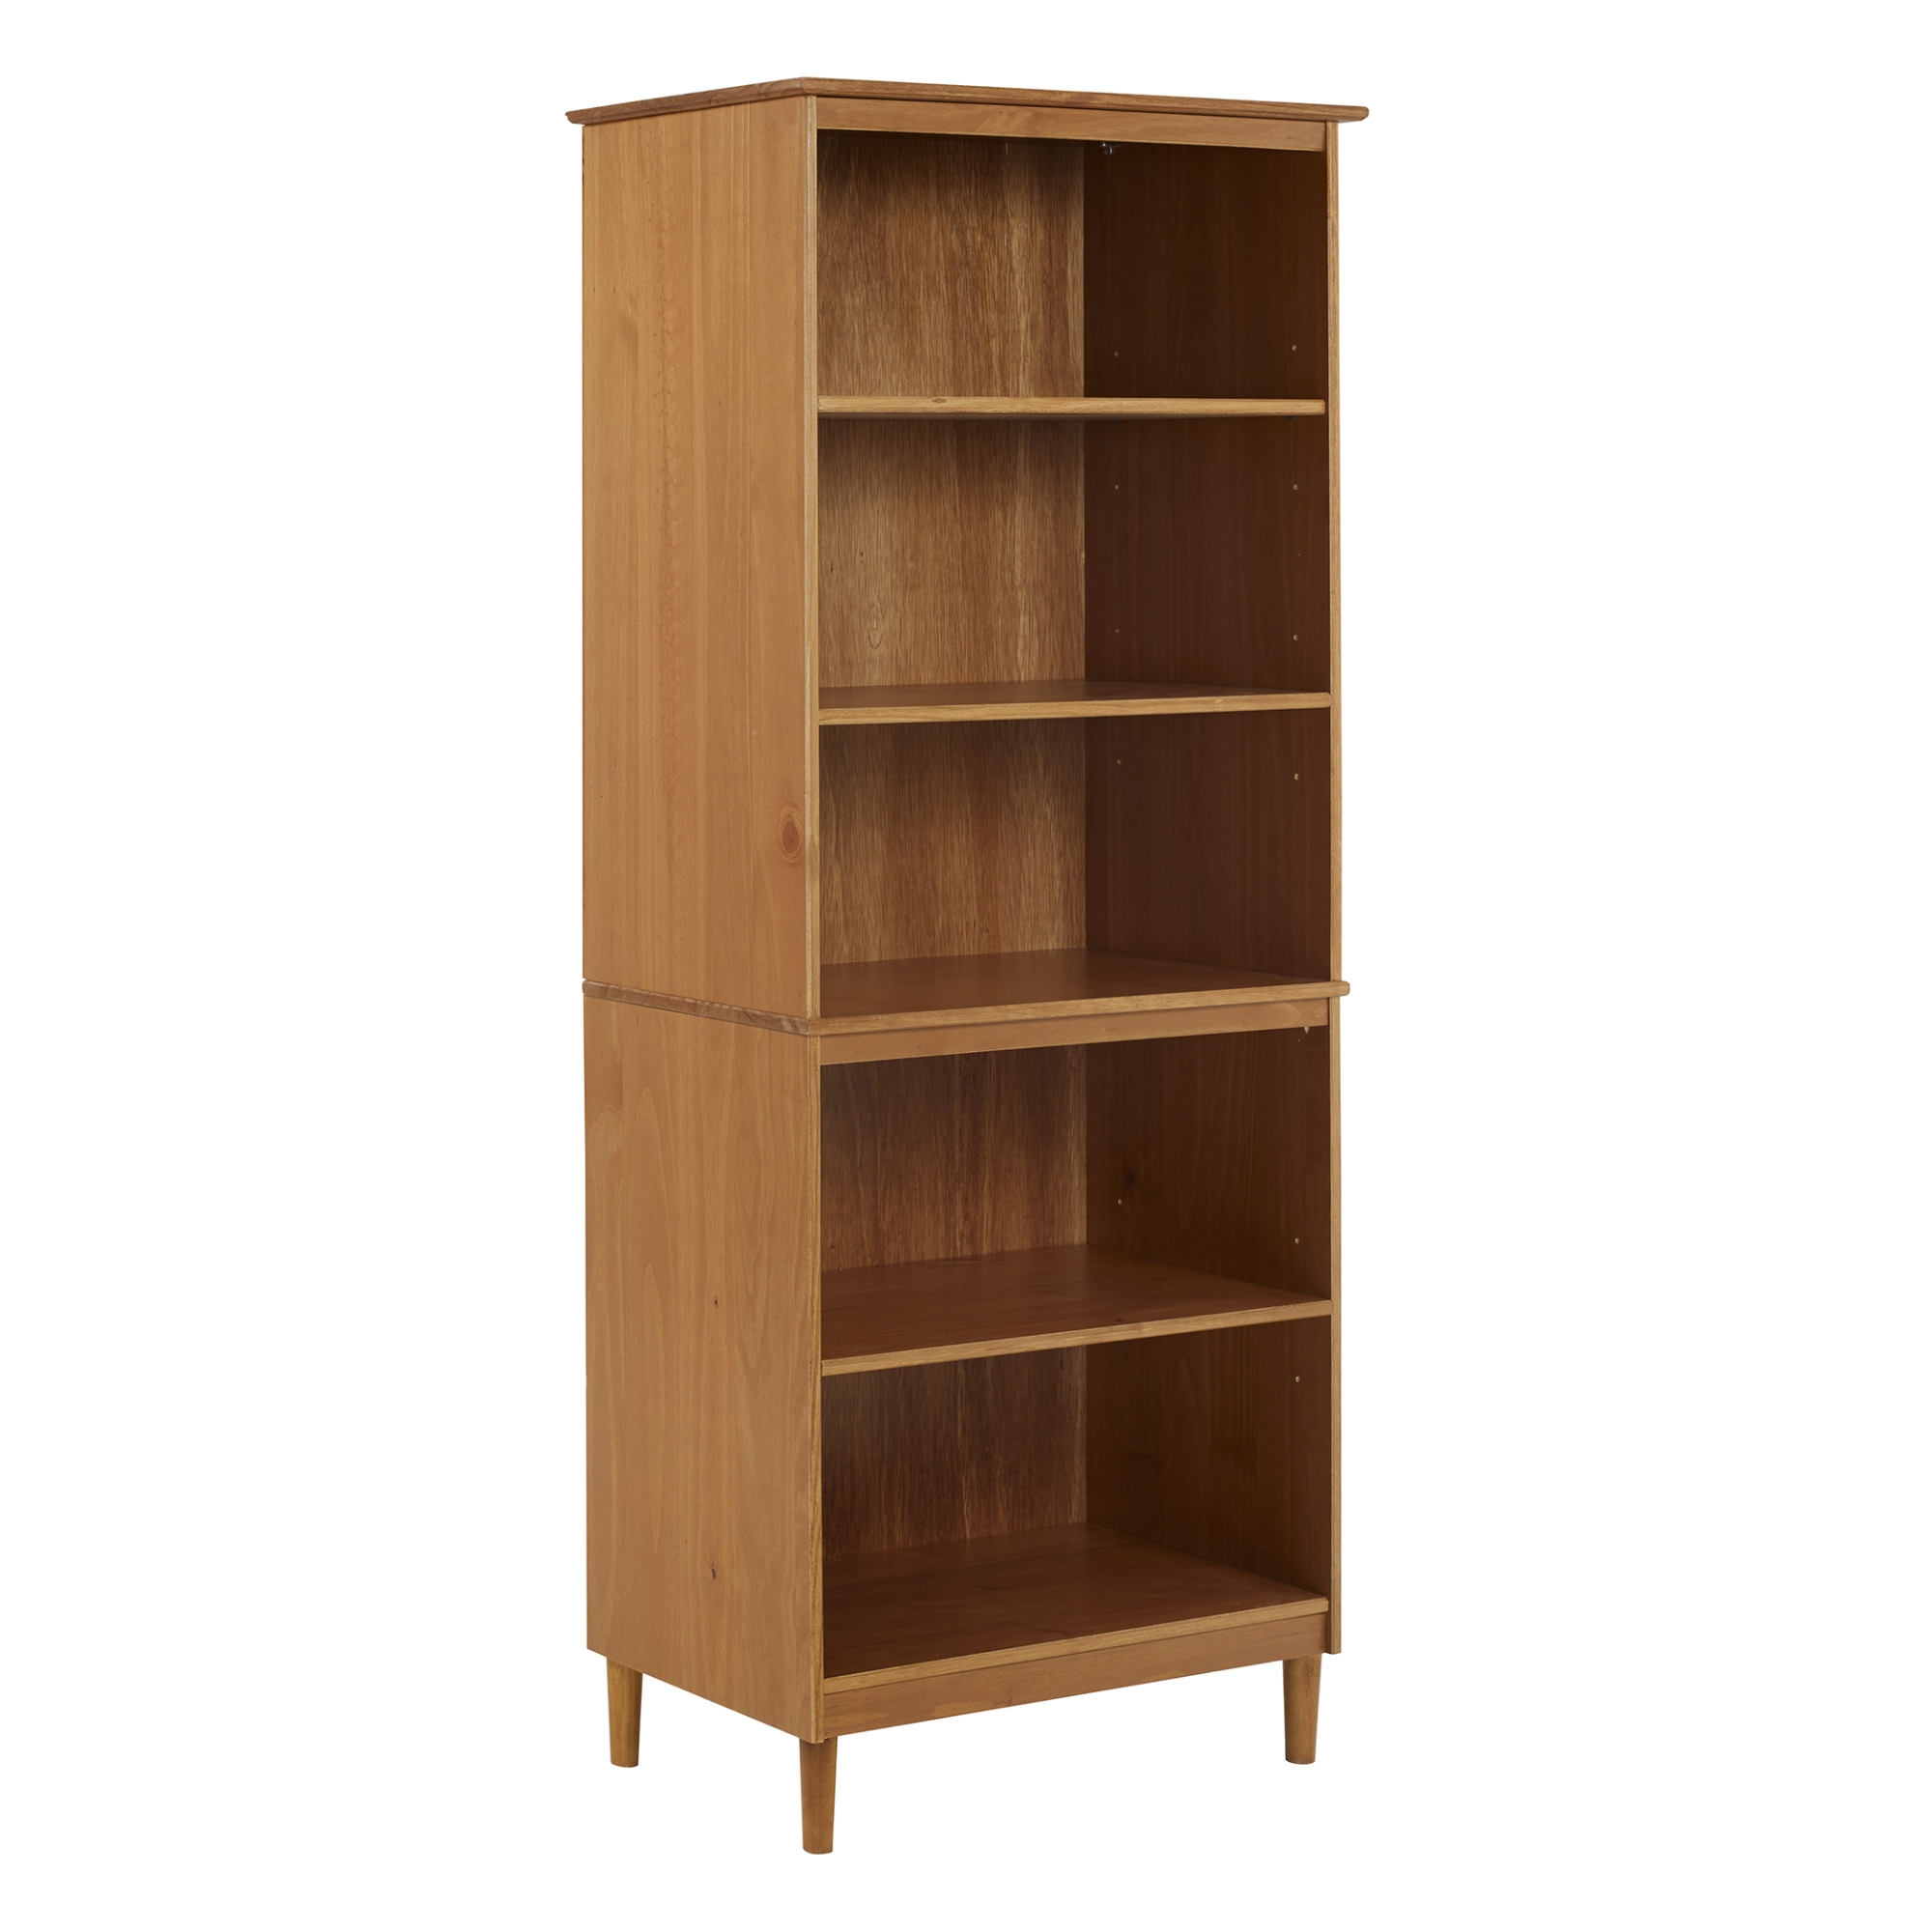 Spencer Wood Bookcase, Caramel - Image 0